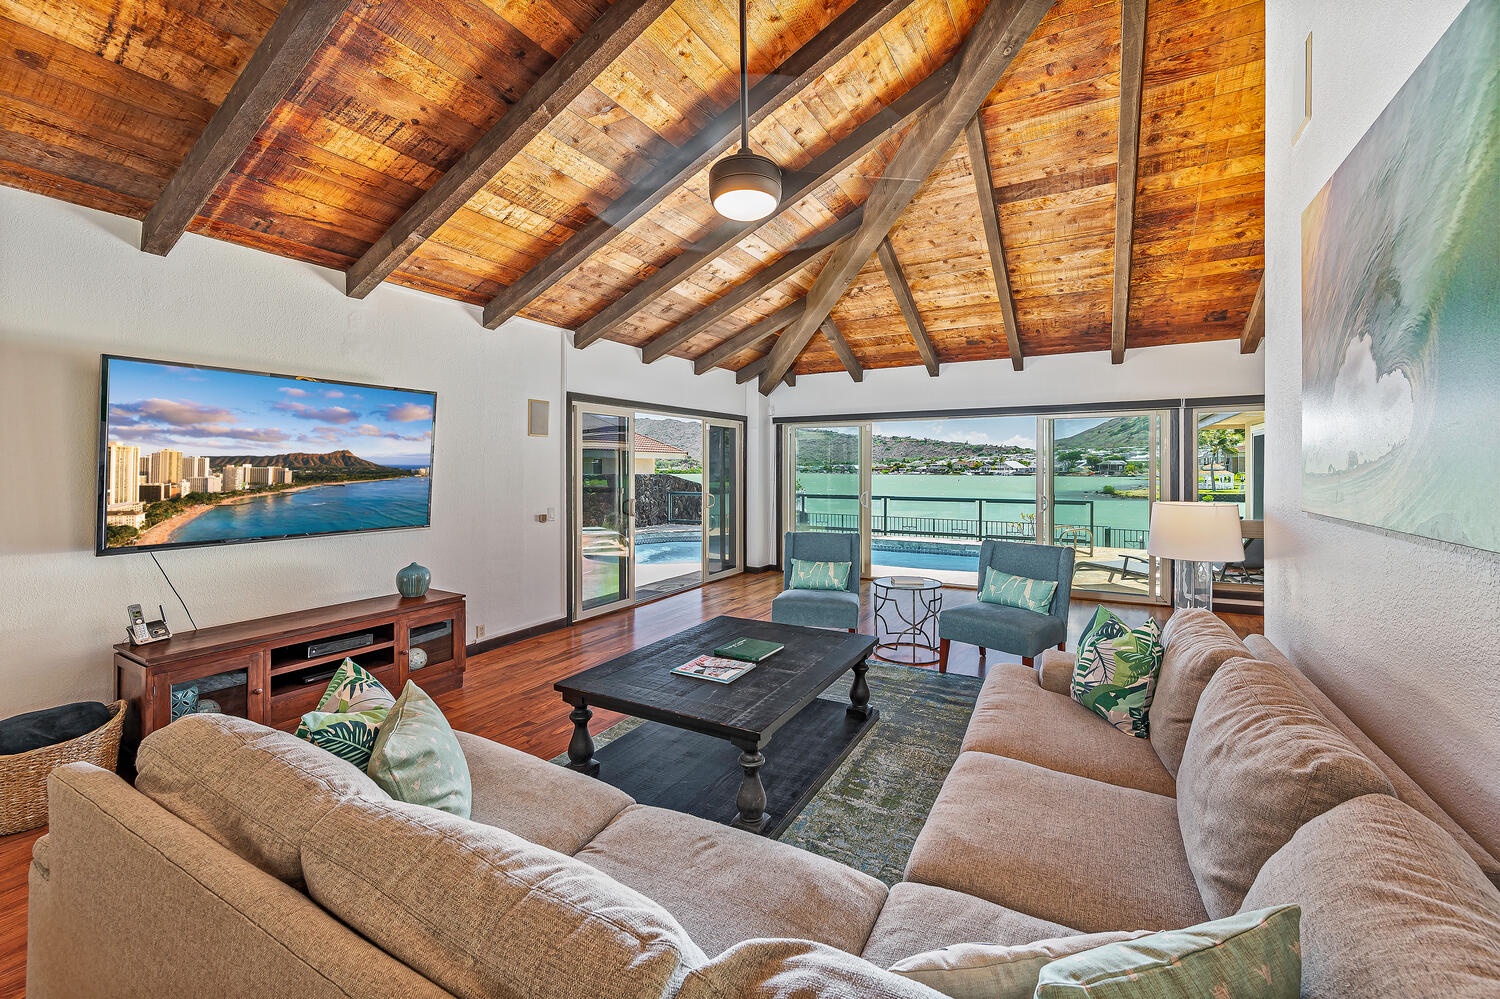 Honolulu Vacation Rentals, Nani Wai - Main living room with pool and stunning marina views.